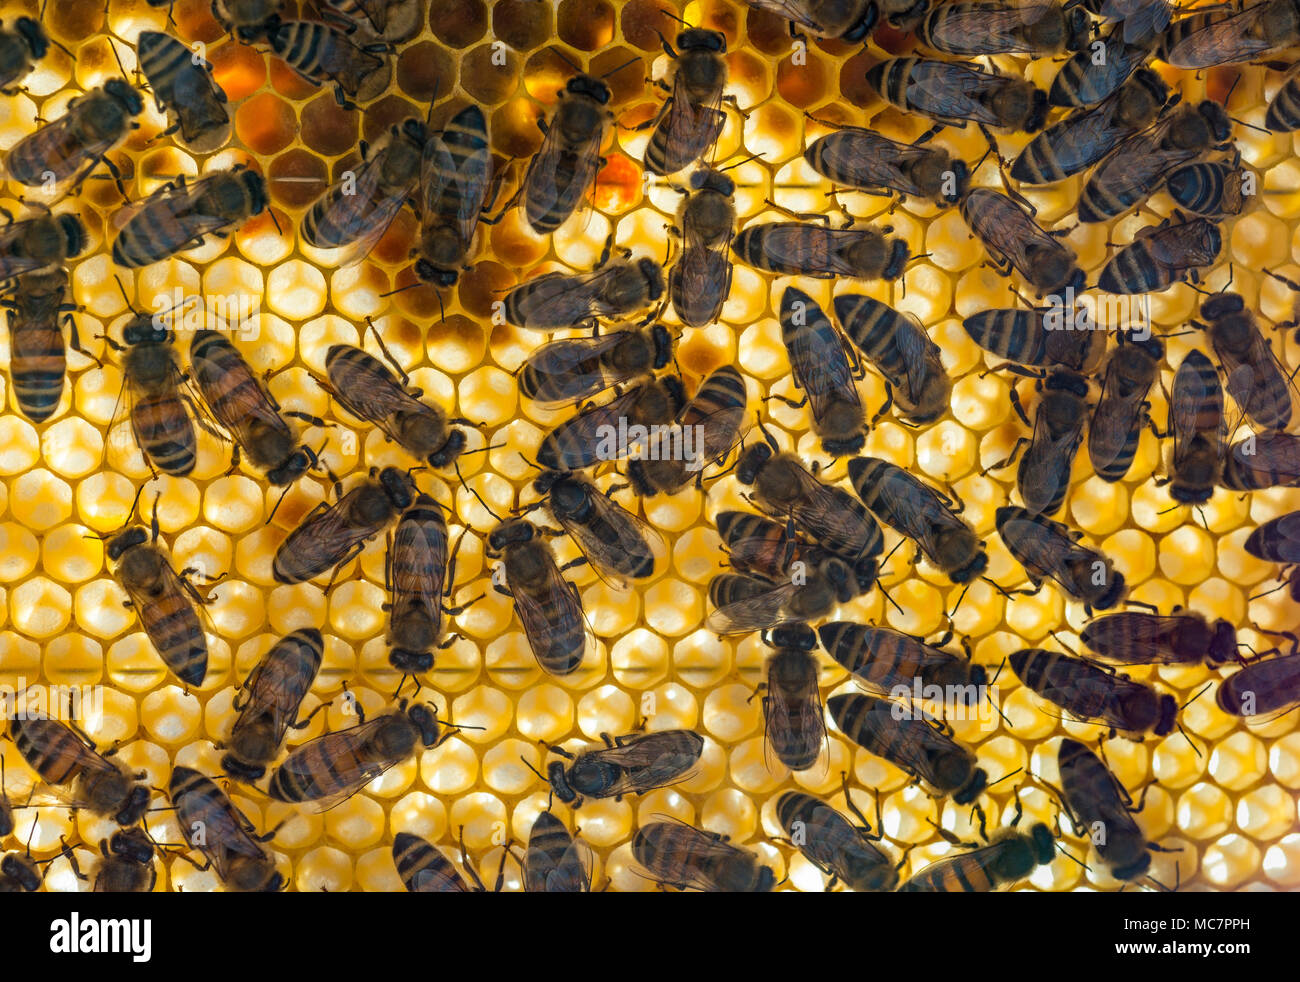 Honey bees, Apis mellifera, on a honeycomb with sunlight shining through the honeycomb. Stock Photo